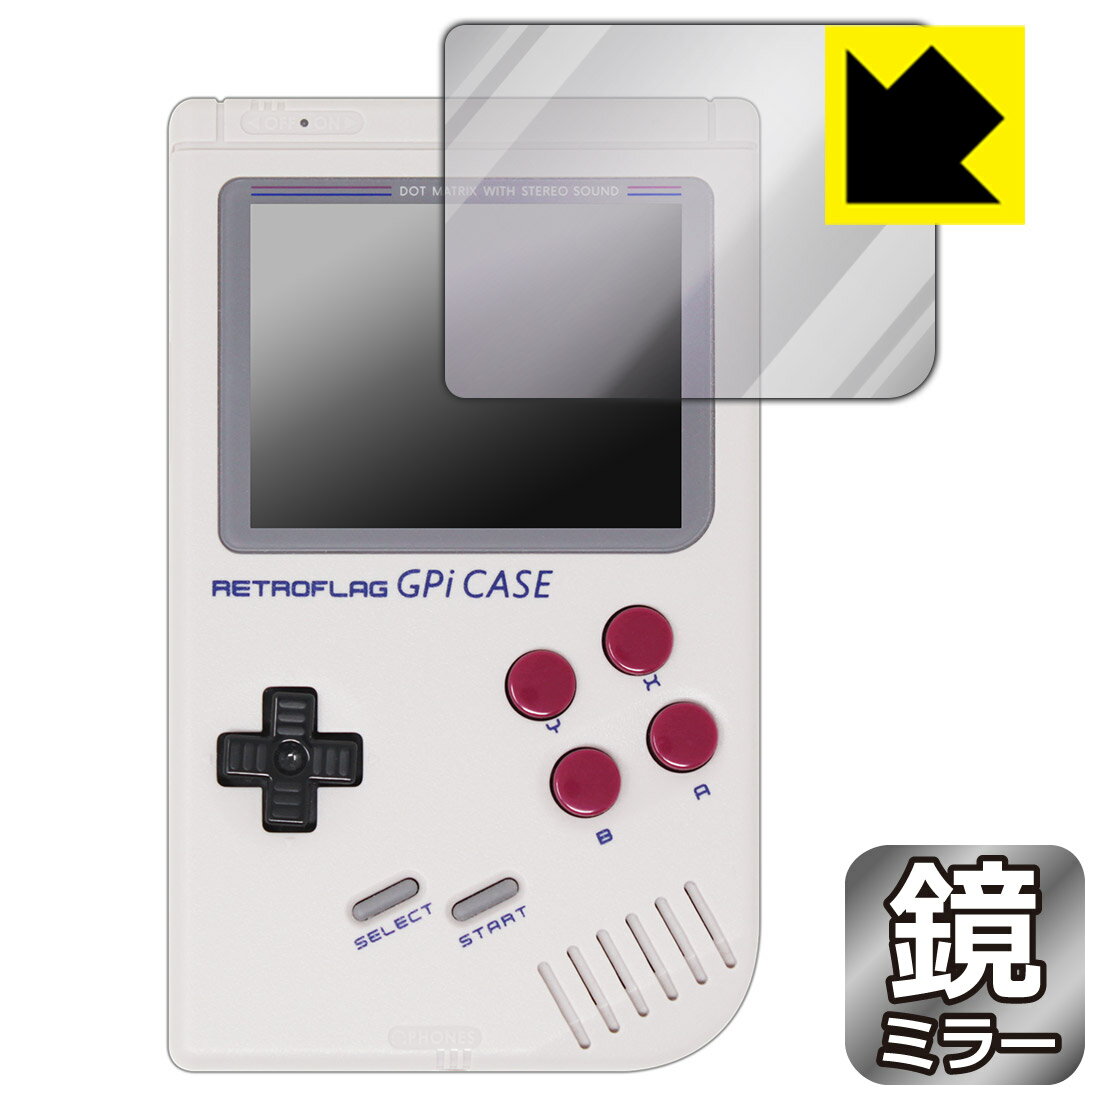 Mirror Shield RETROFLAG GPi CASE 用 液晶保護フィルム (画面用) 日本製 自社製造直販